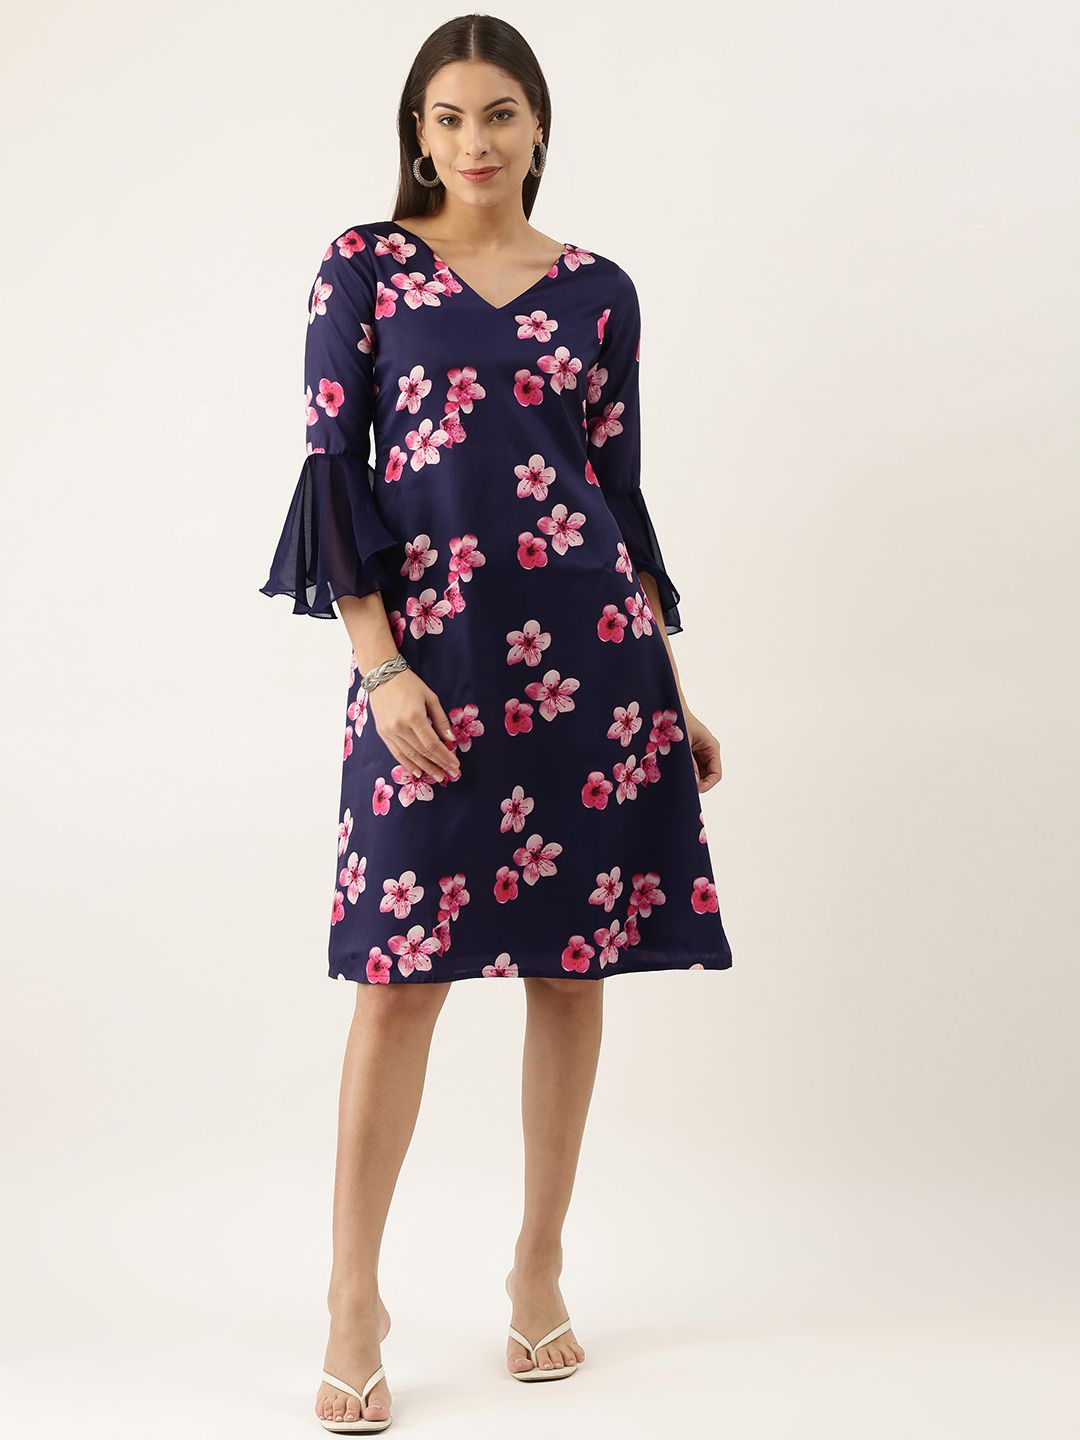 EthnoVogue Blue & Pink Floral A-Line Dress Price in India